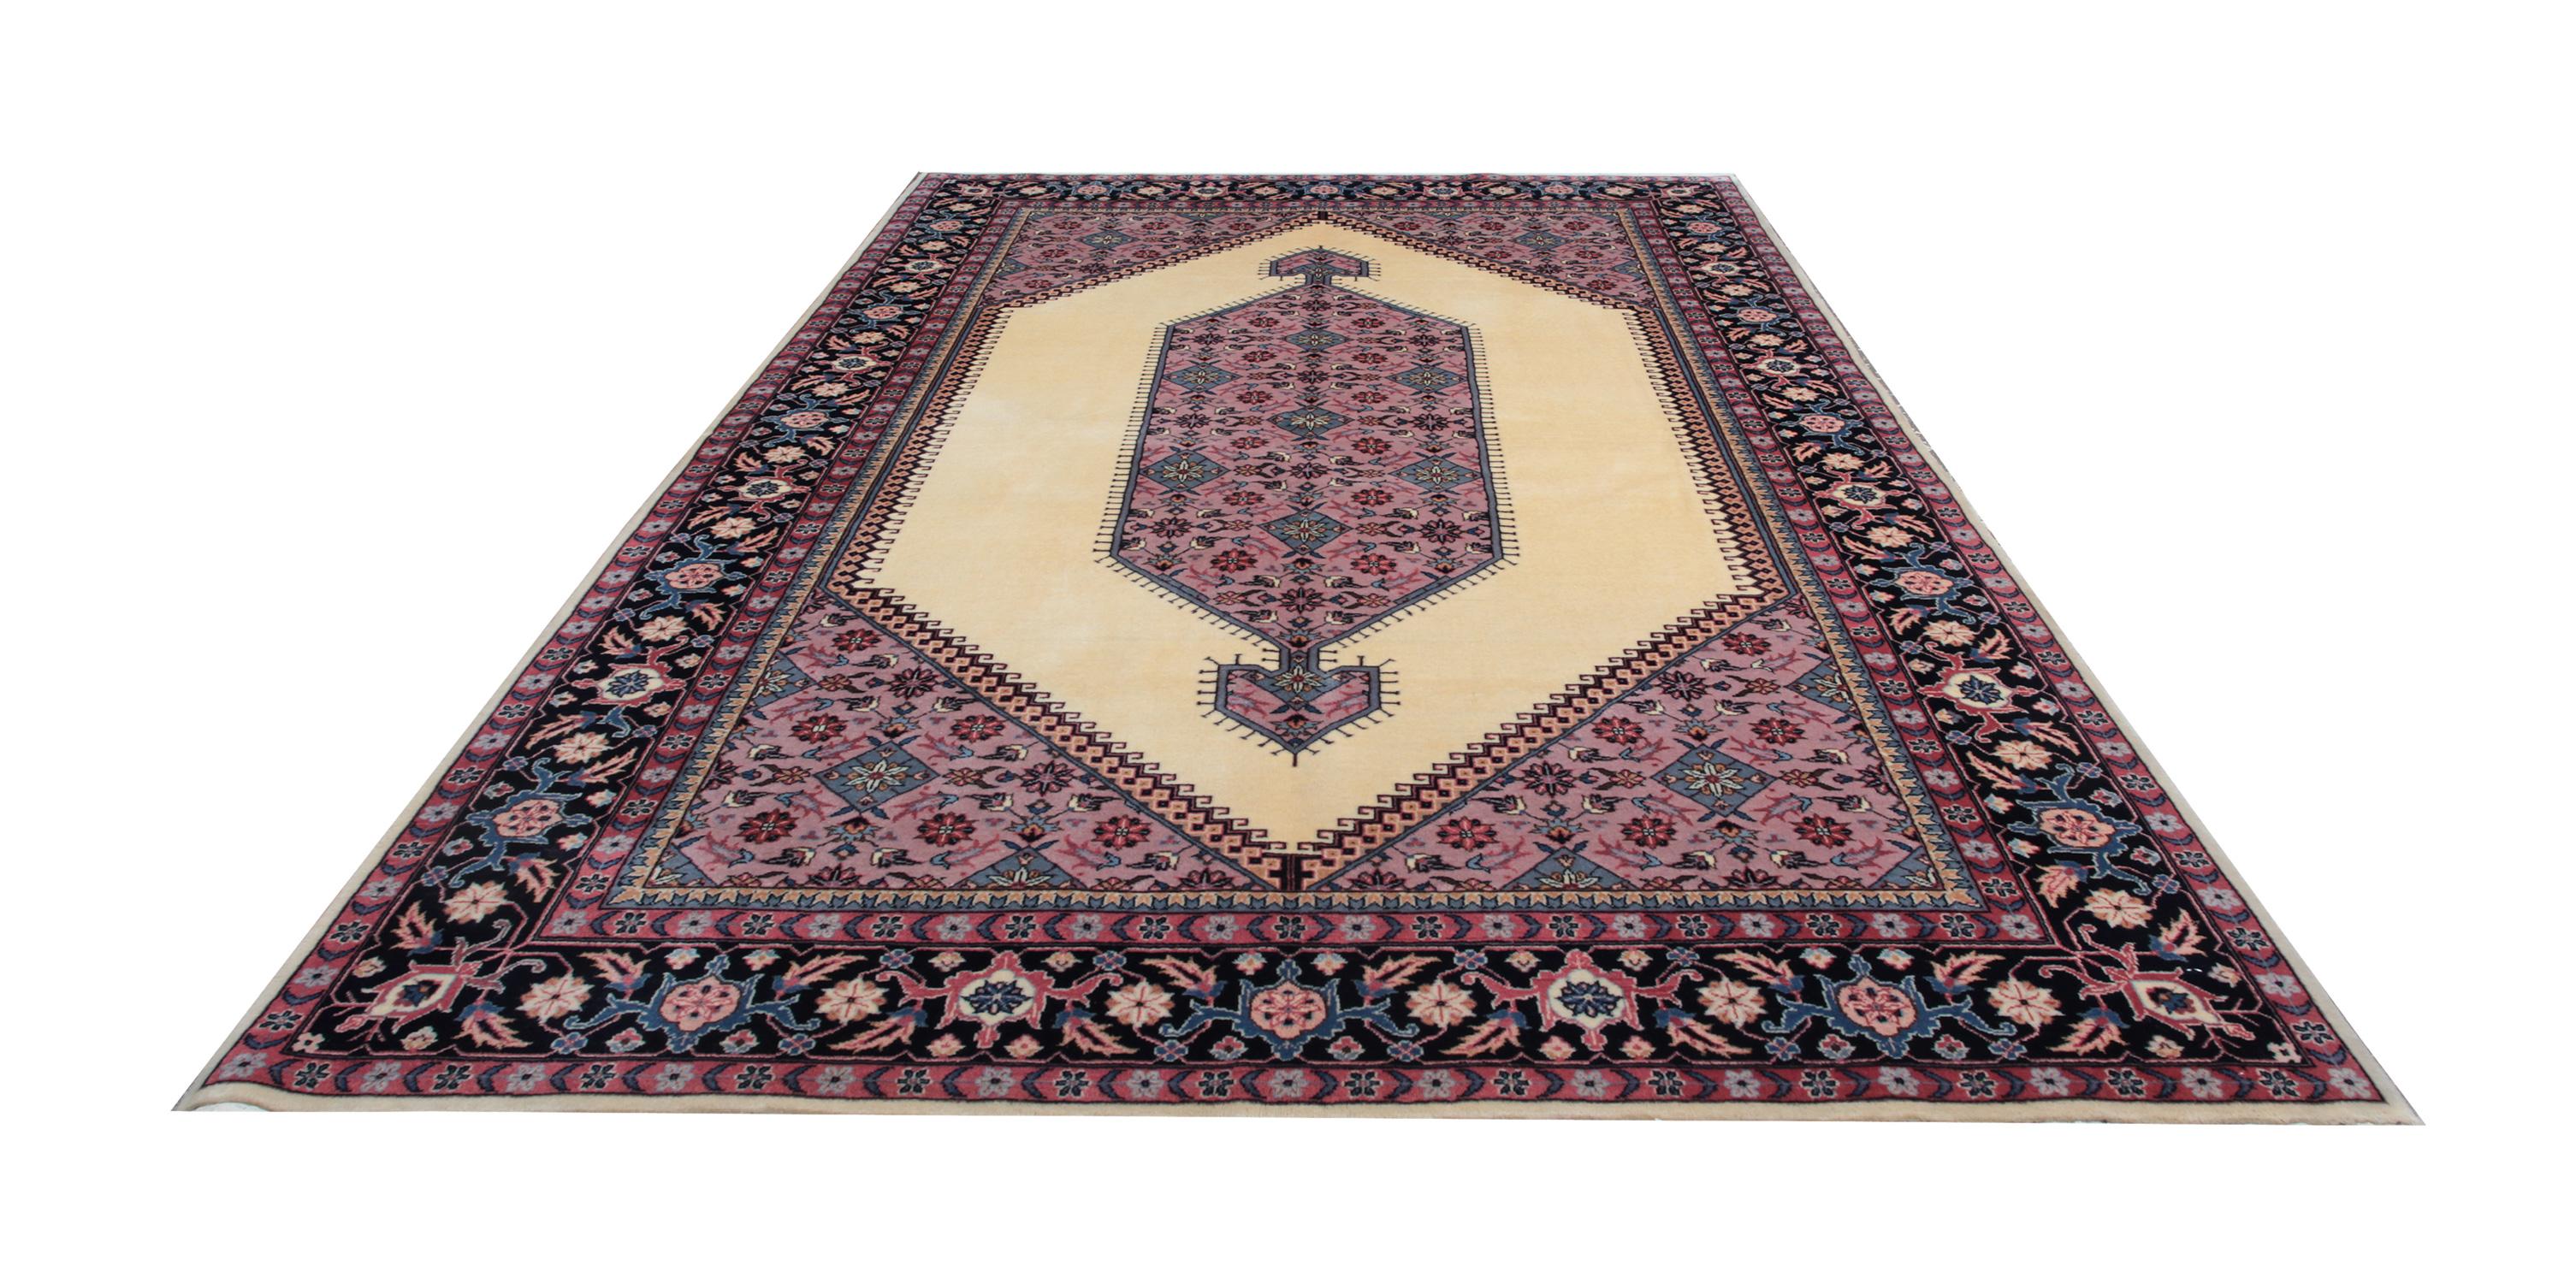 Kazak Magnificent Traditional Chinese Runner, Handwoven Carpet